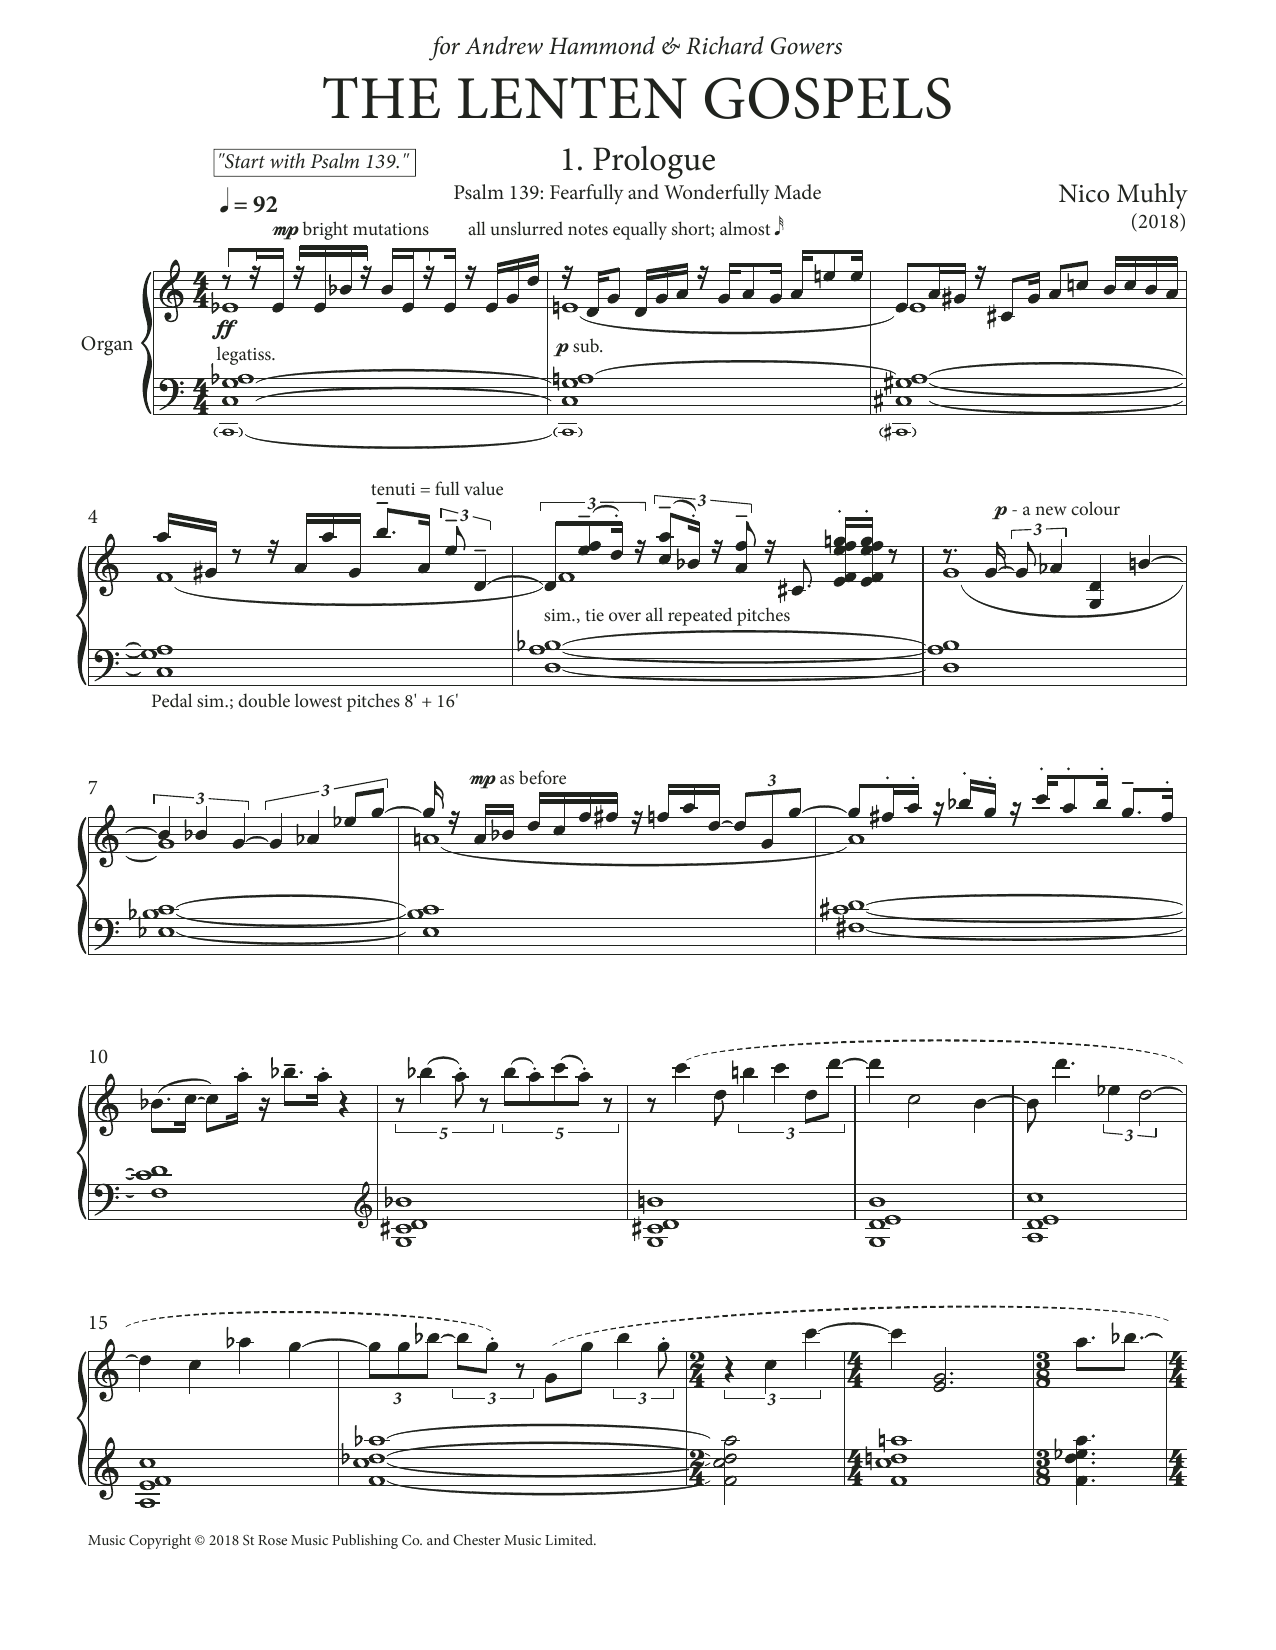 Nico Muhly The Lenten Gospels Sheet Music Notes & Chords for Organ - Download or Print PDF